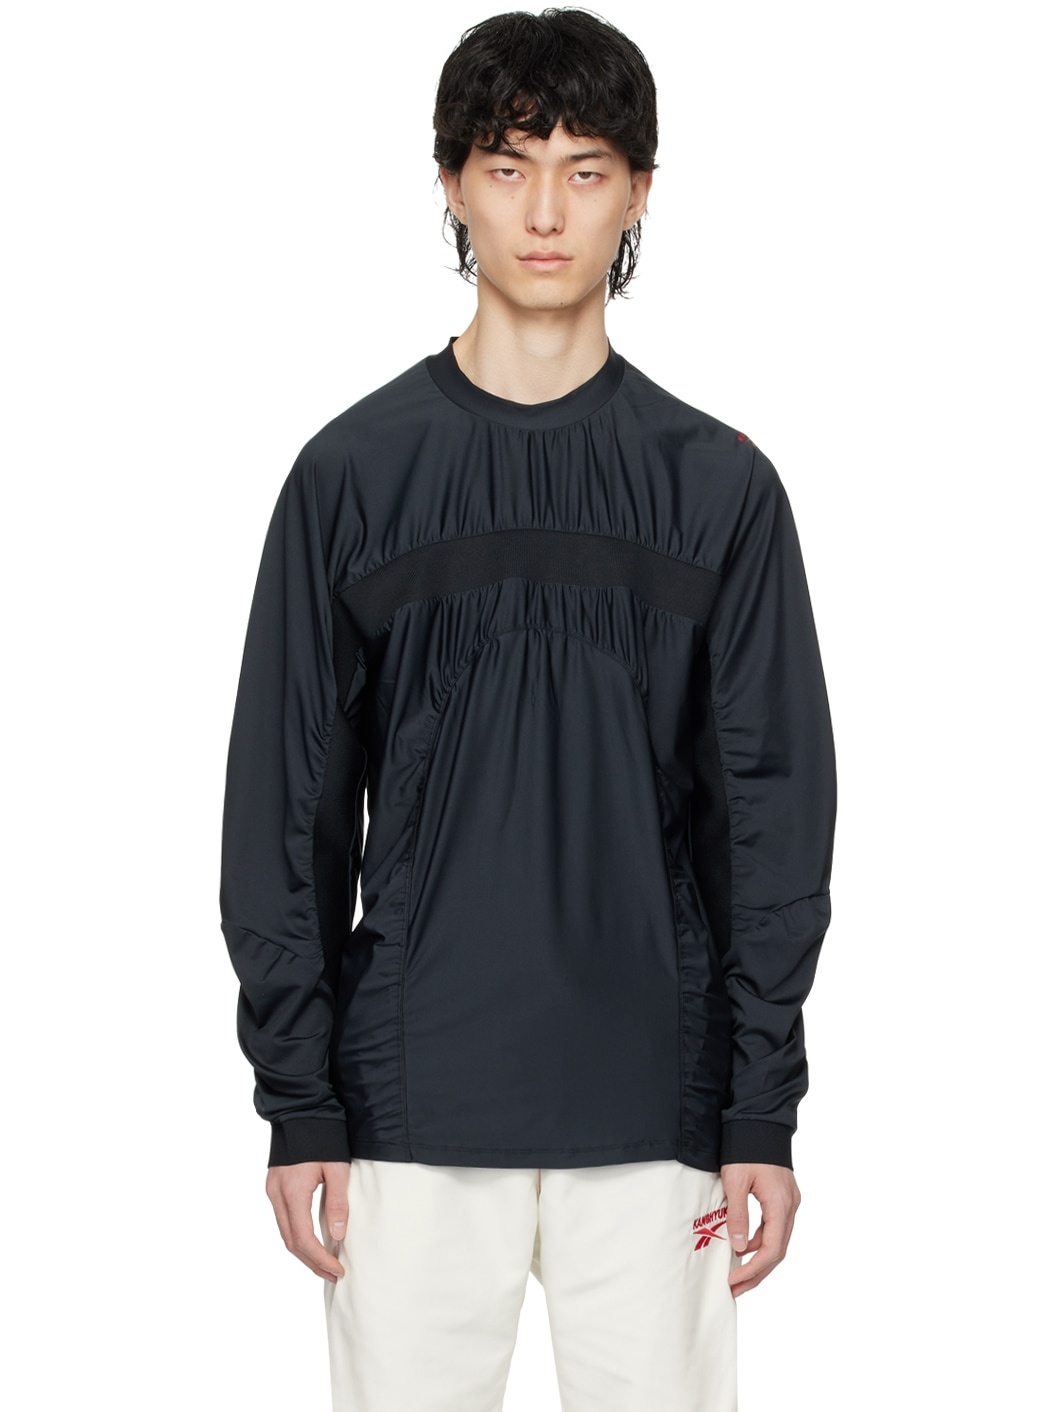 Black Reebok Edition Long Sleeve T-Shirt - 1